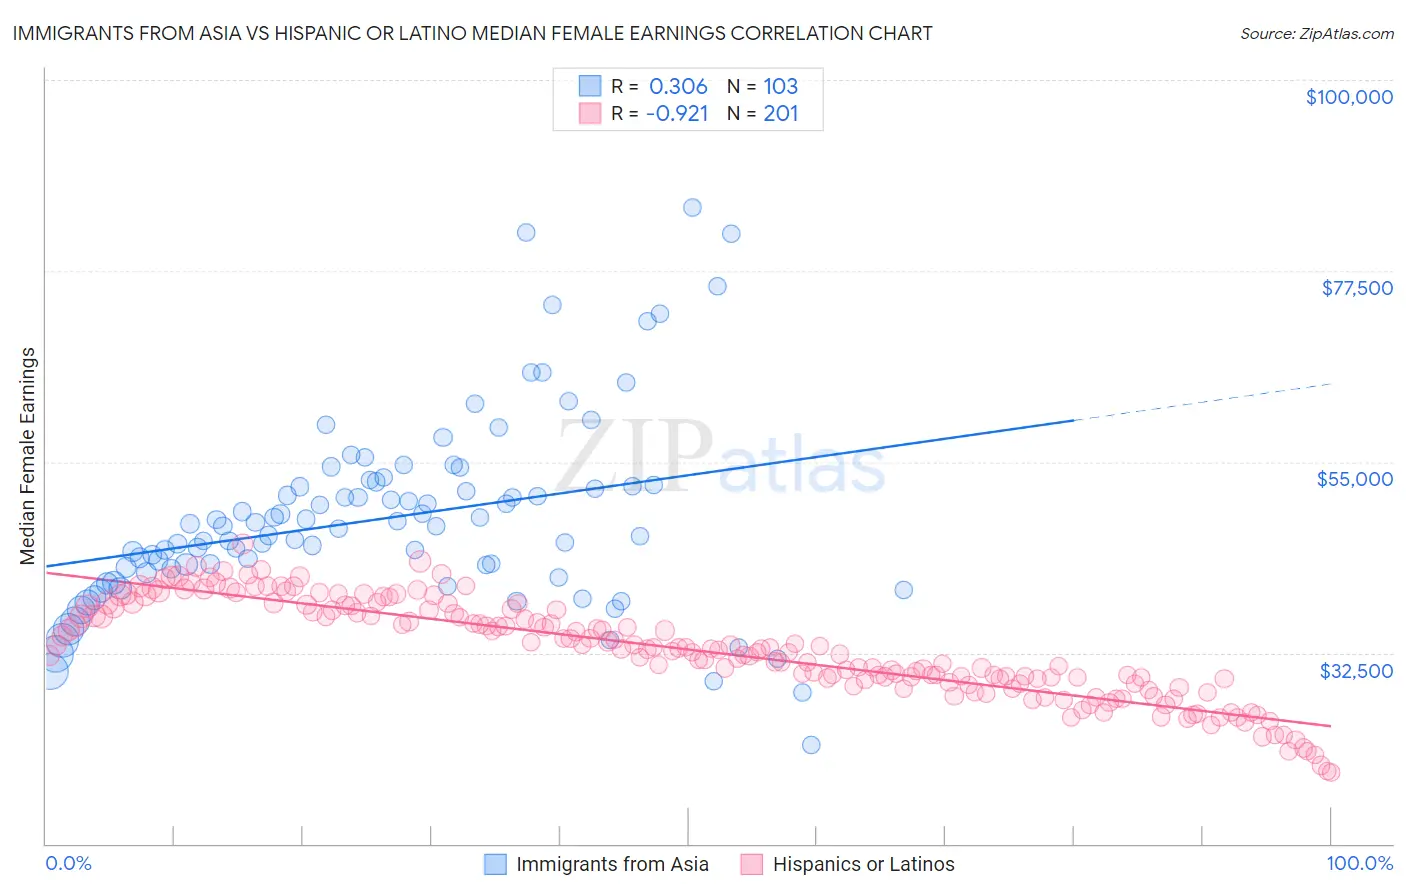 Immigrants from Asia vs Hispanic or Latino Median Female Earnings